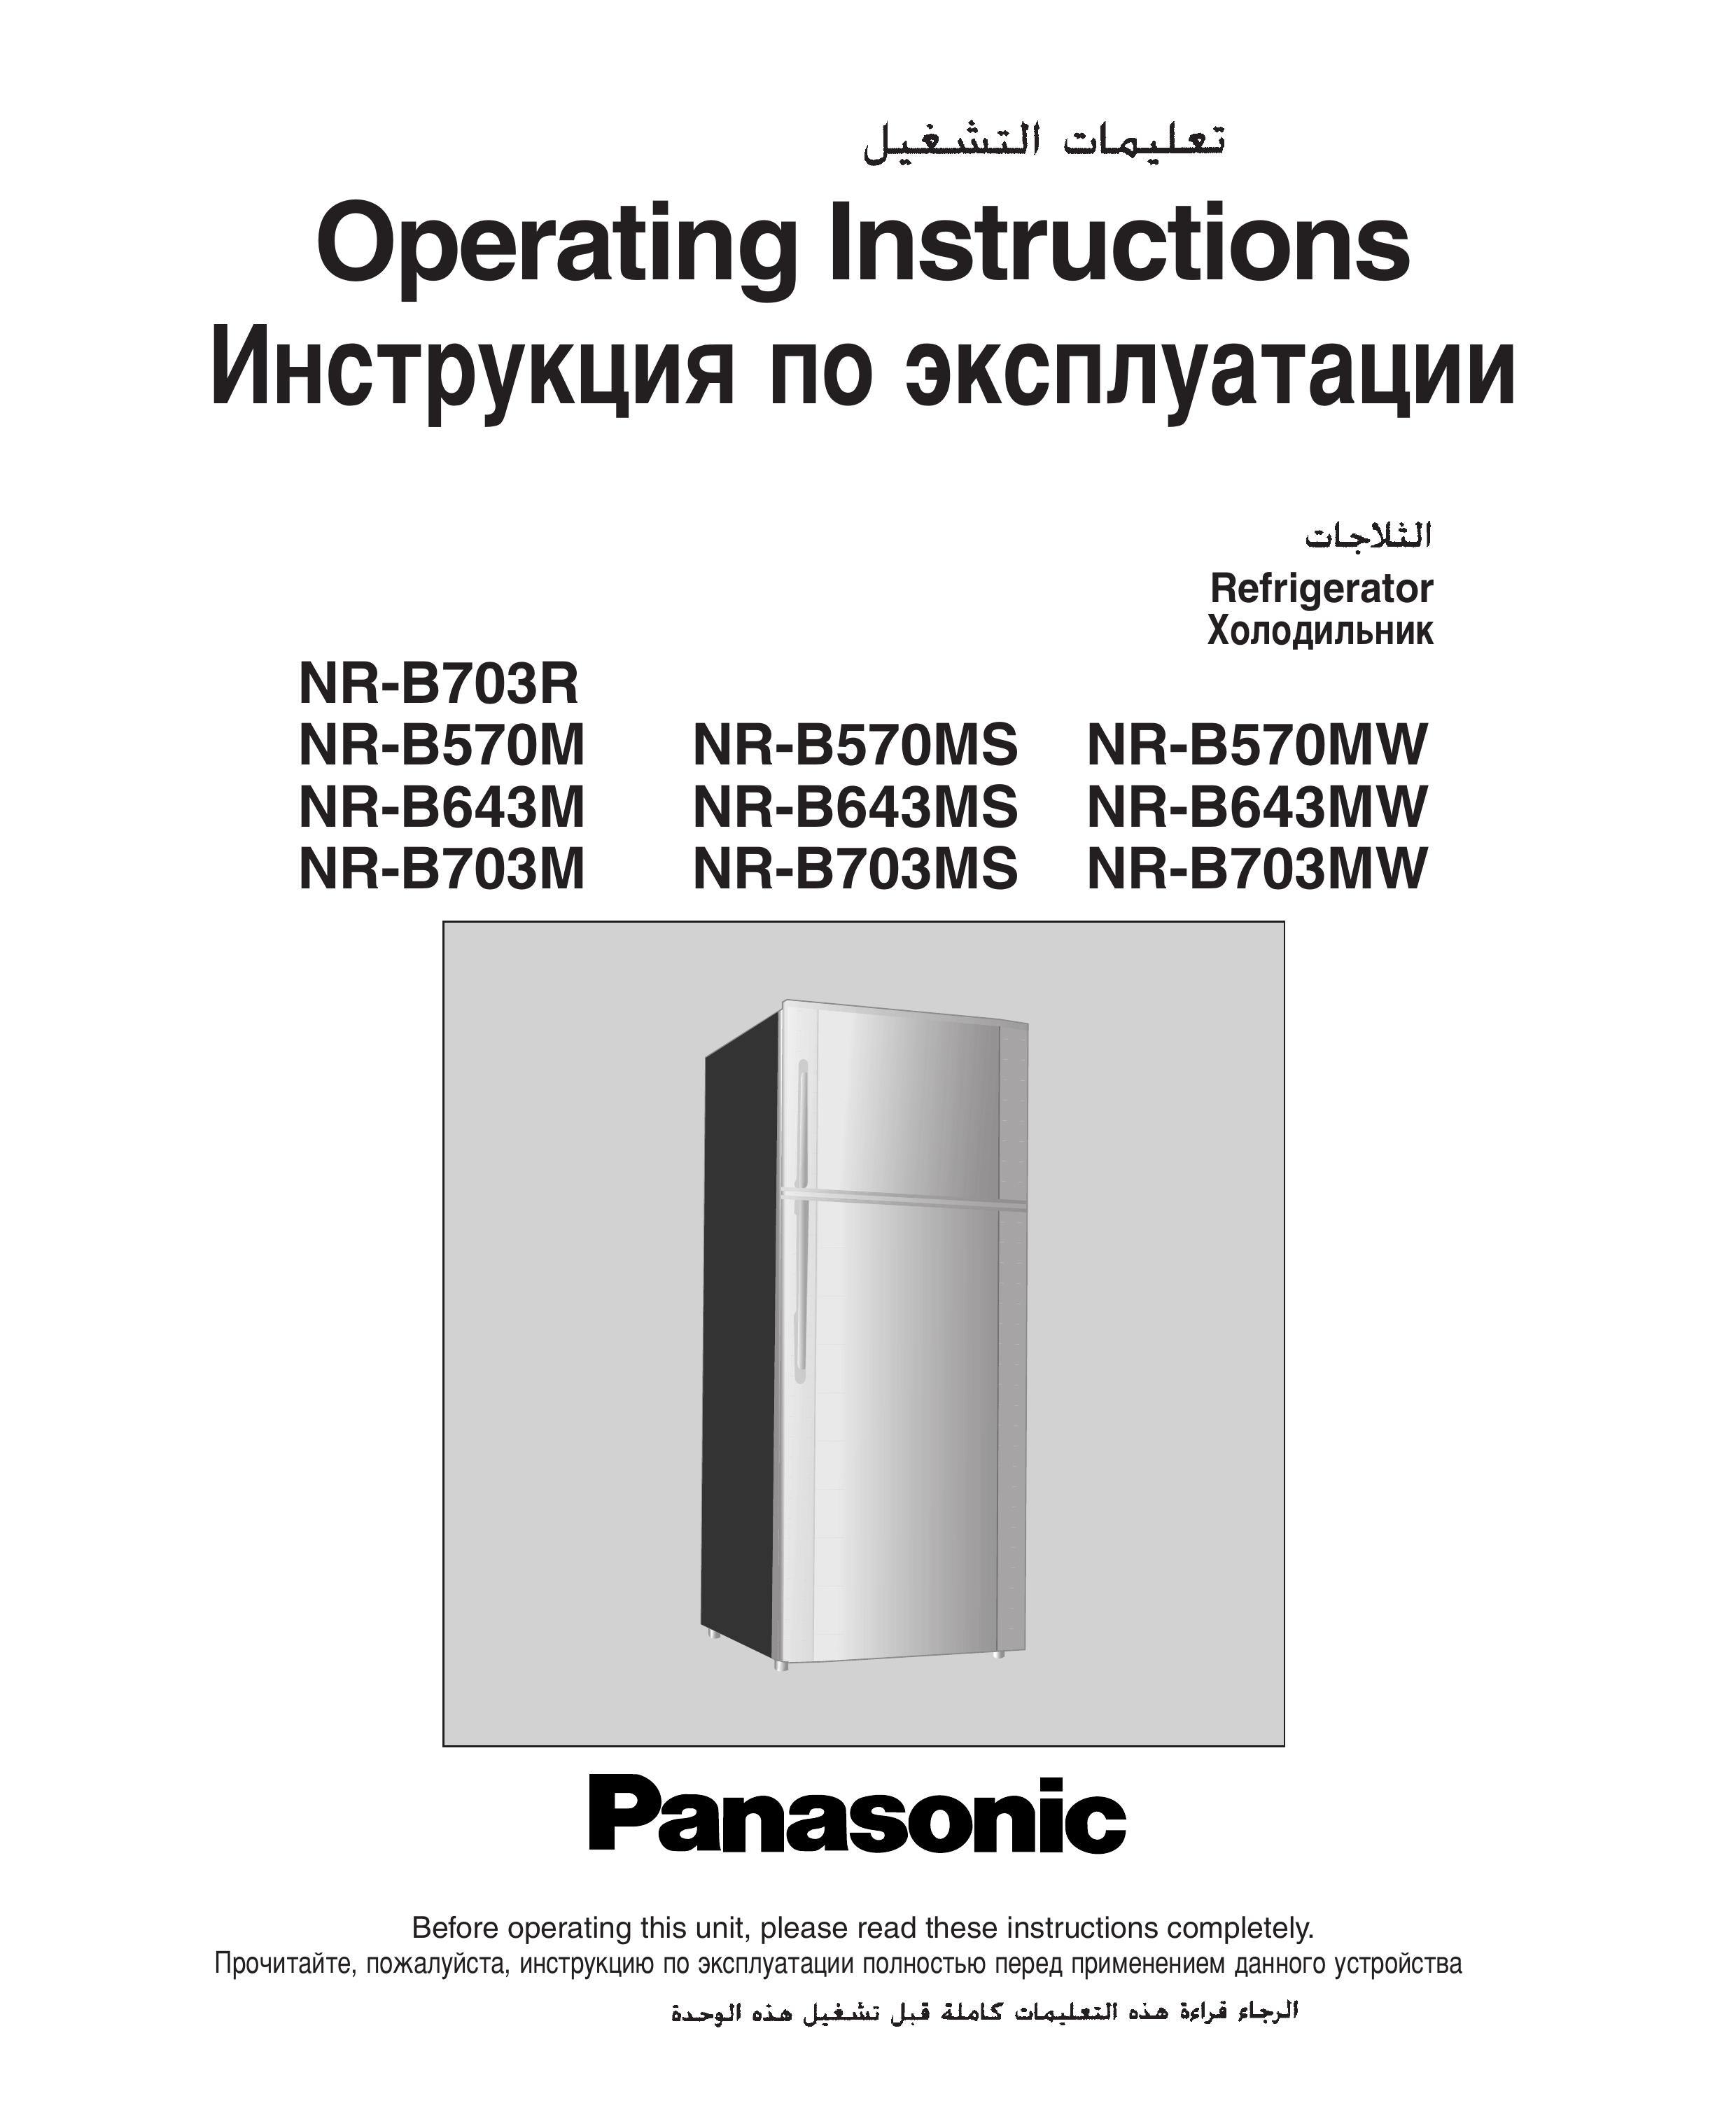 Panasonic NR-B703MW Refrigerator User Manual